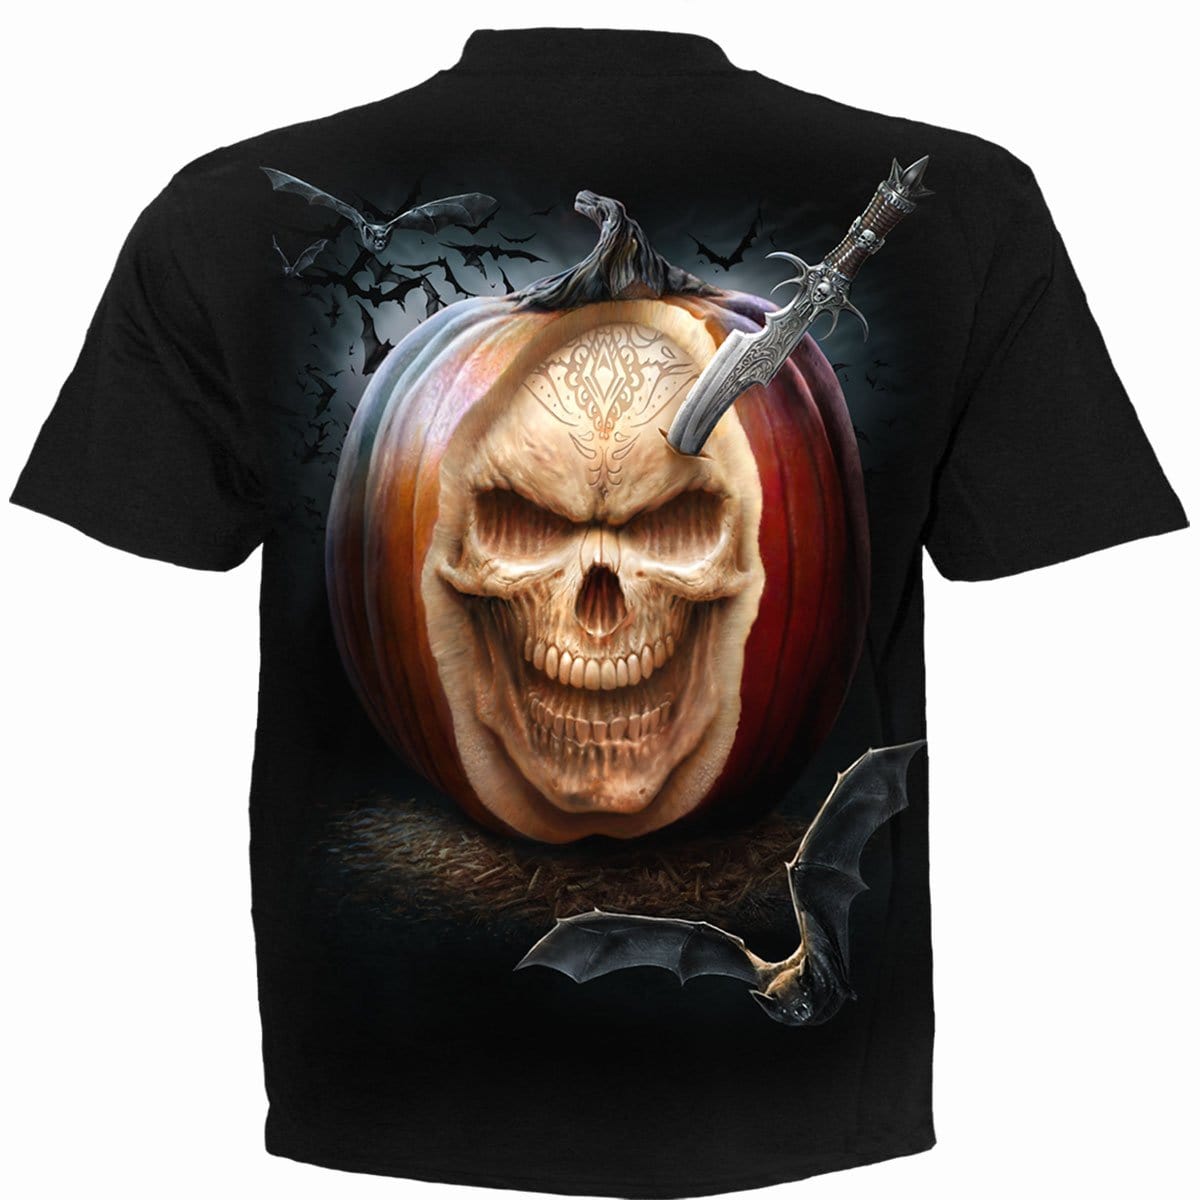 CARVING DEATH - T-Shirt Black - Spiral USA